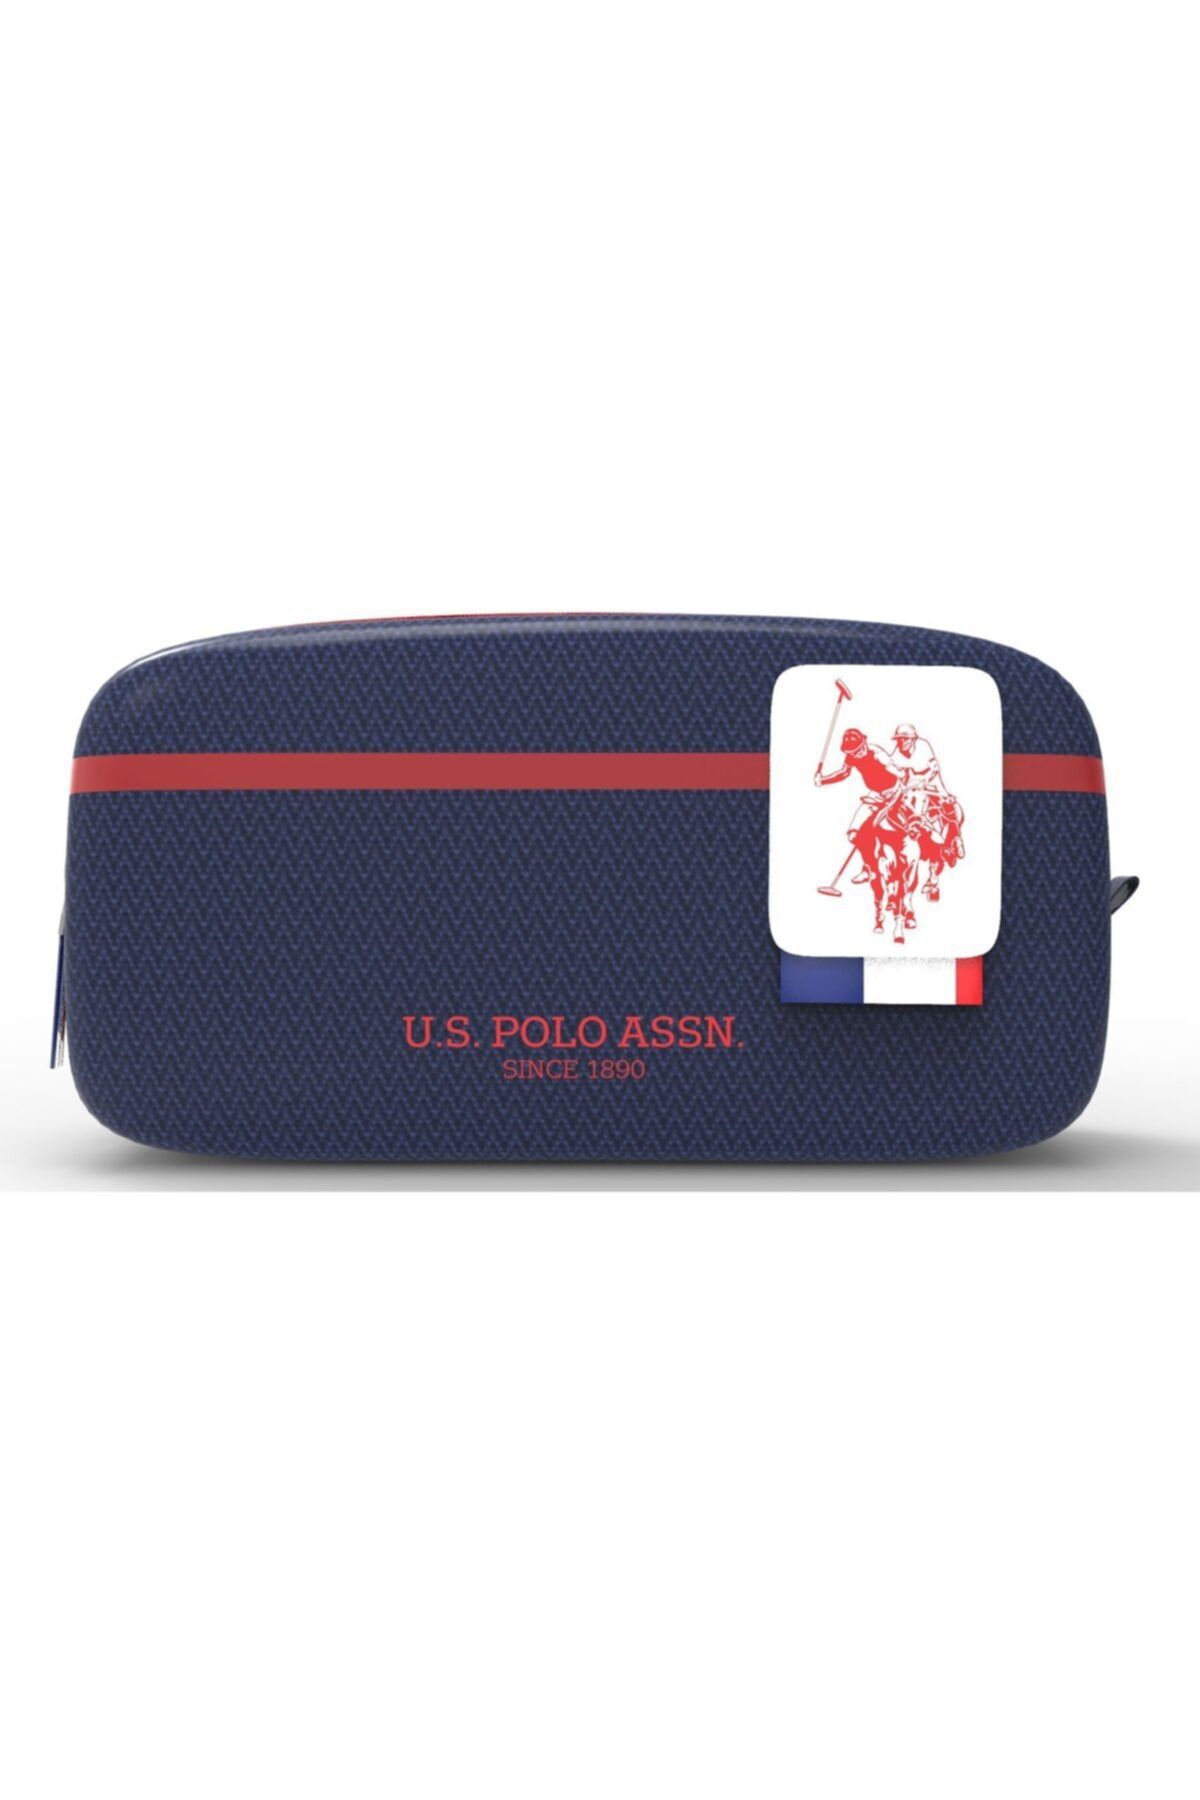 U.S. Polo Assn. Kalem Cantası